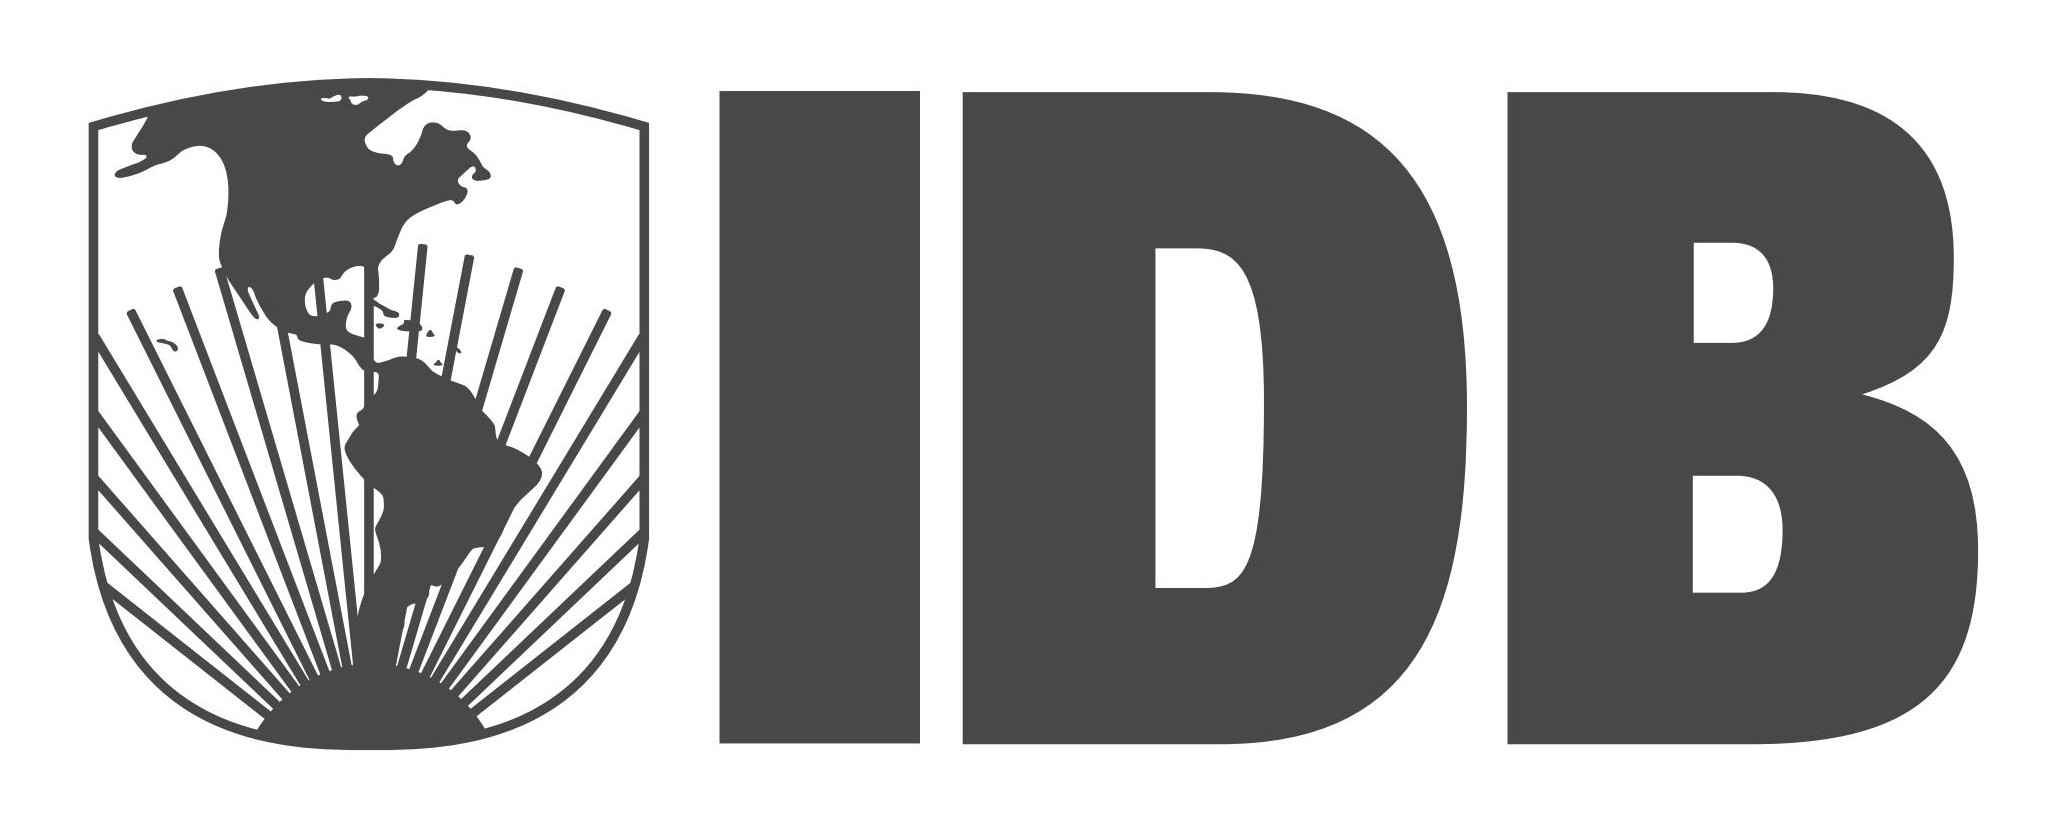 IDB - Inter-American Development Bank Logo [PDF]